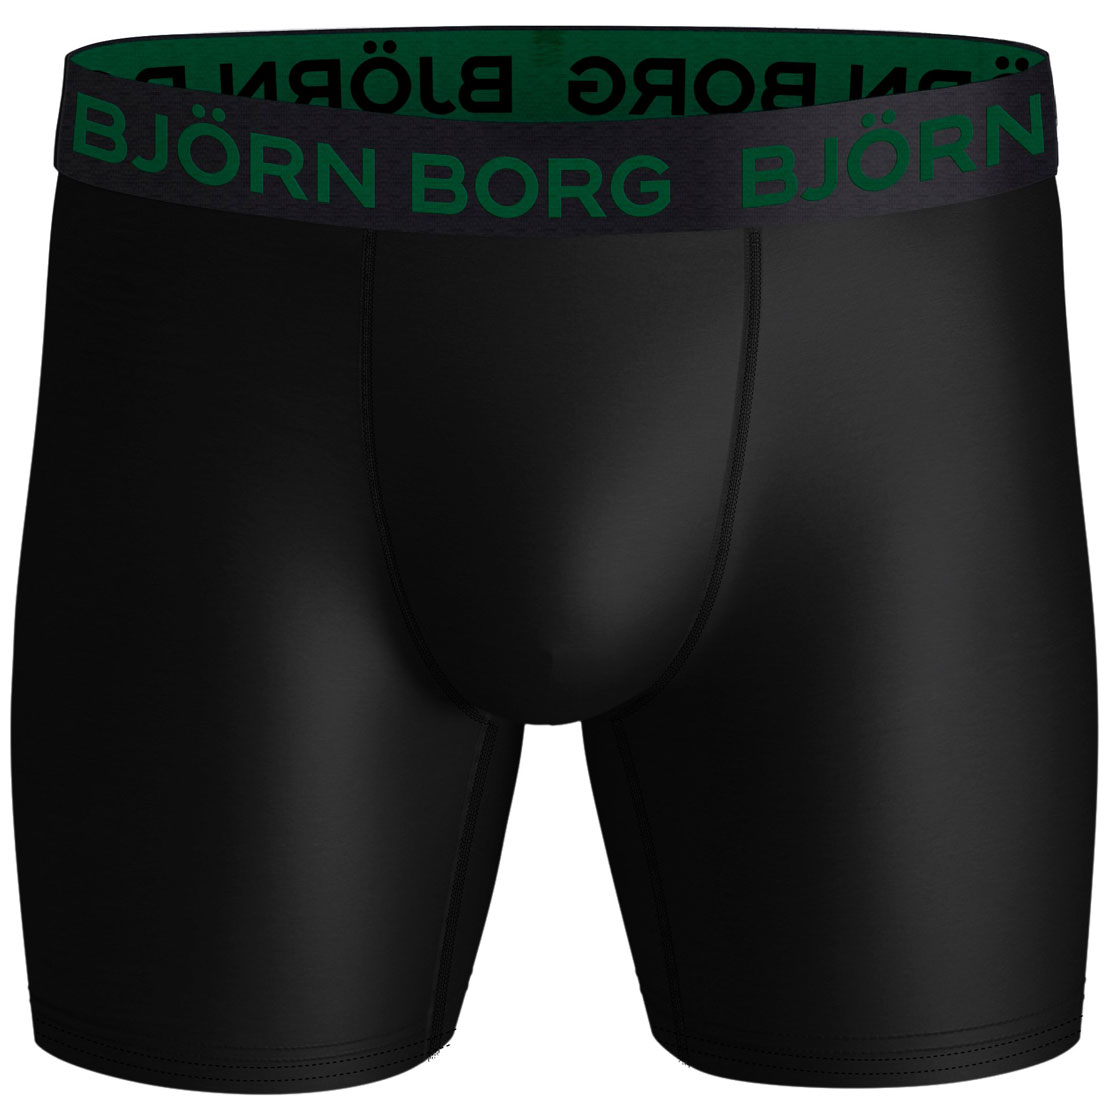 10001729-mp004 Bjorn Borg zwart